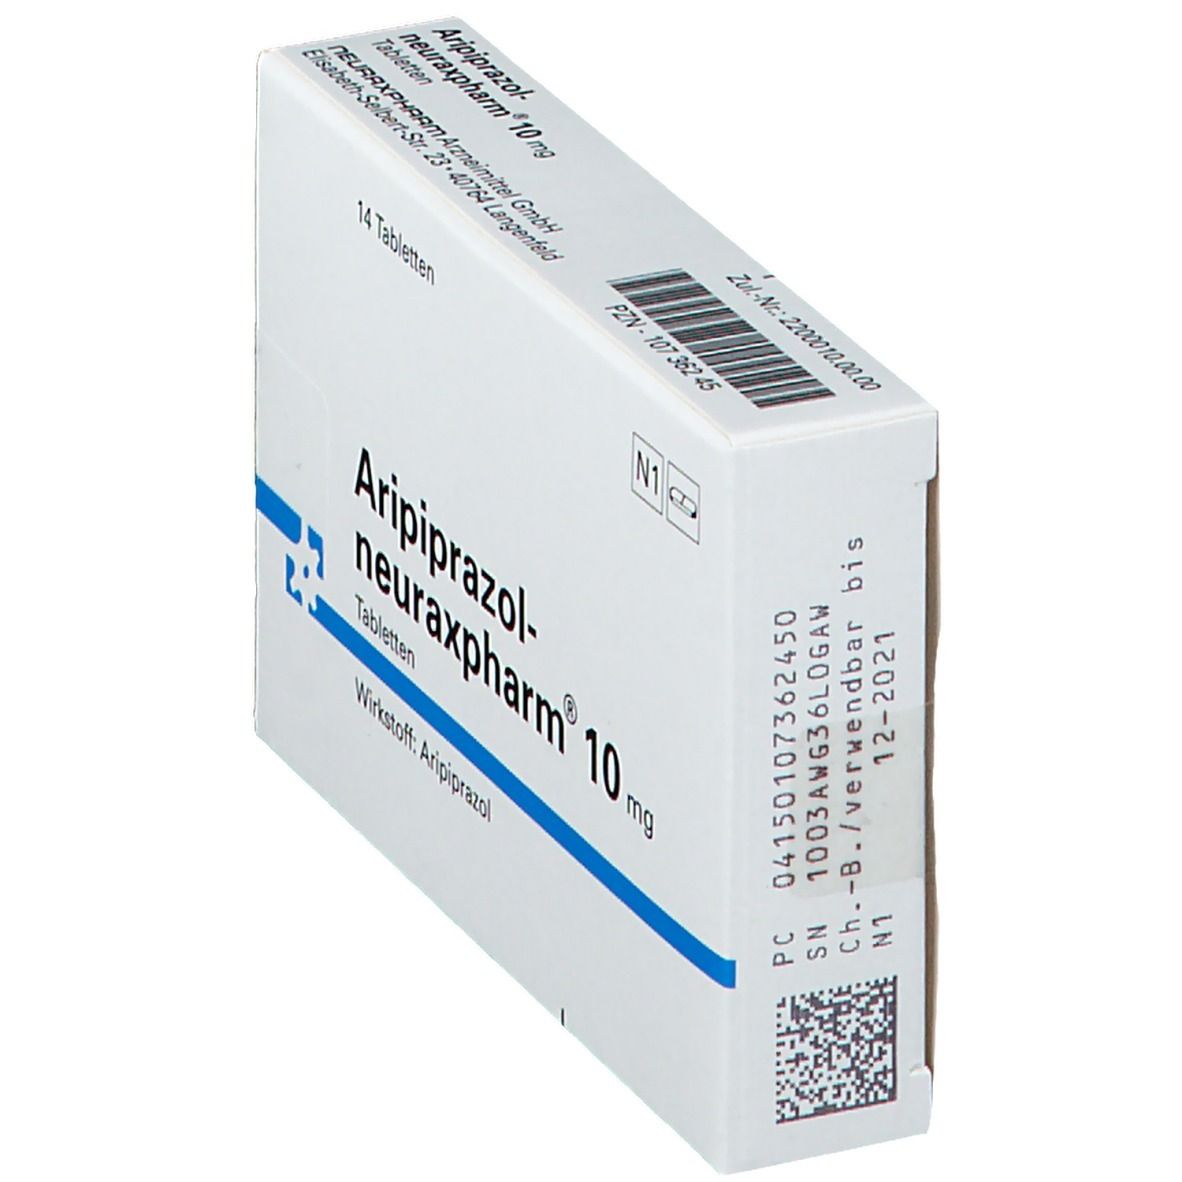 Aripiprazol-neuraxpharm® 10 mg